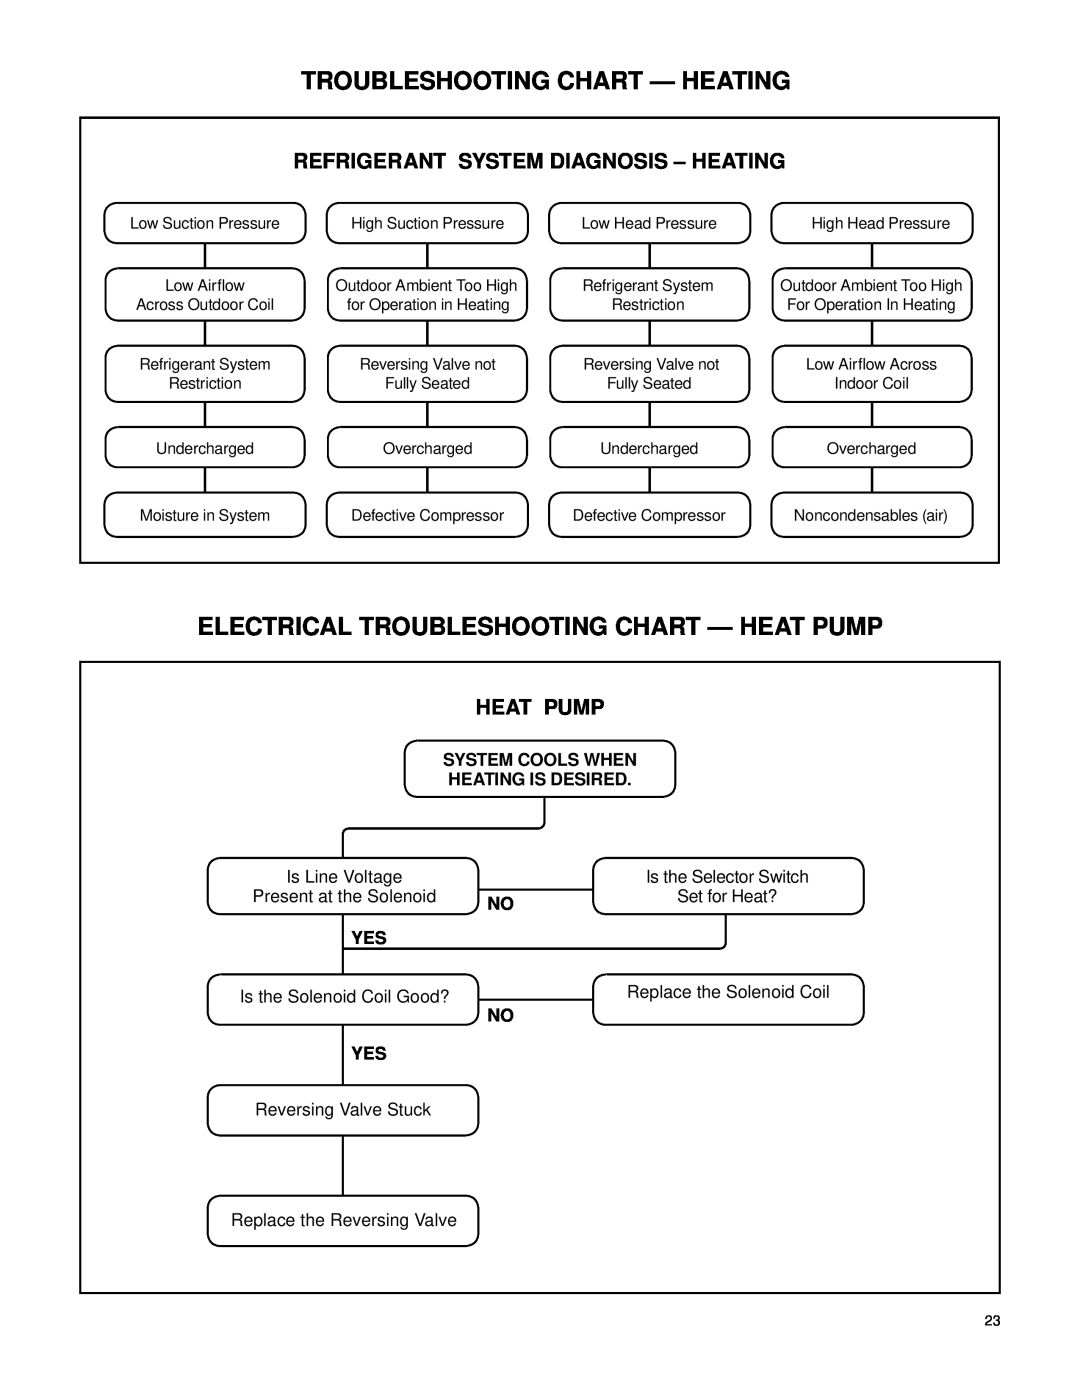 Friedrich 2007 service manual Troubleshooting Chart - Heating, Electrical Troubleshooting Chart - Heat Pump 